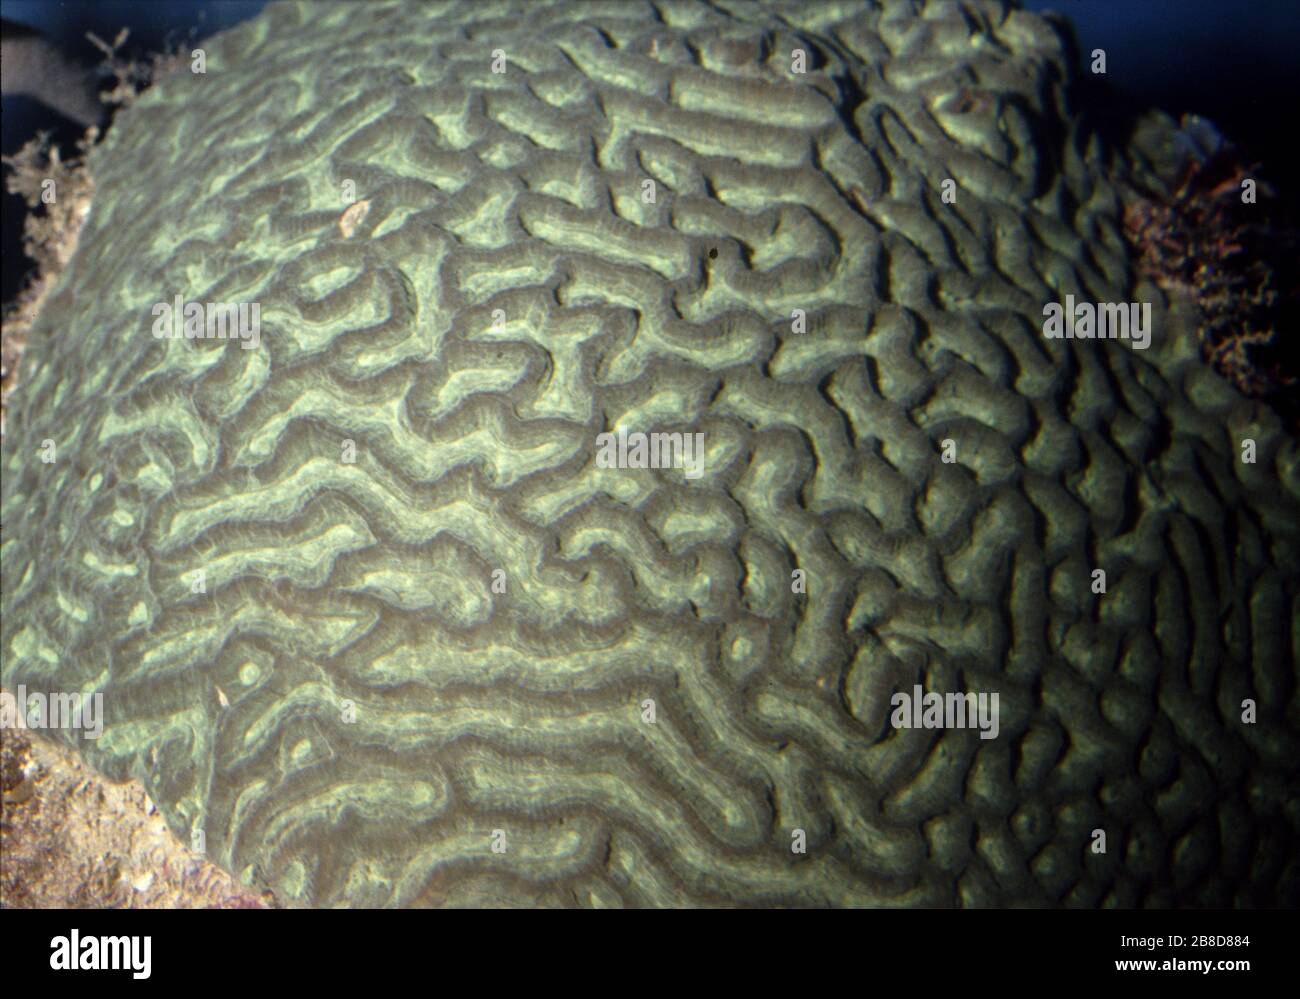 Lesser star coral, Paragoniastrea australensis Stock Photo